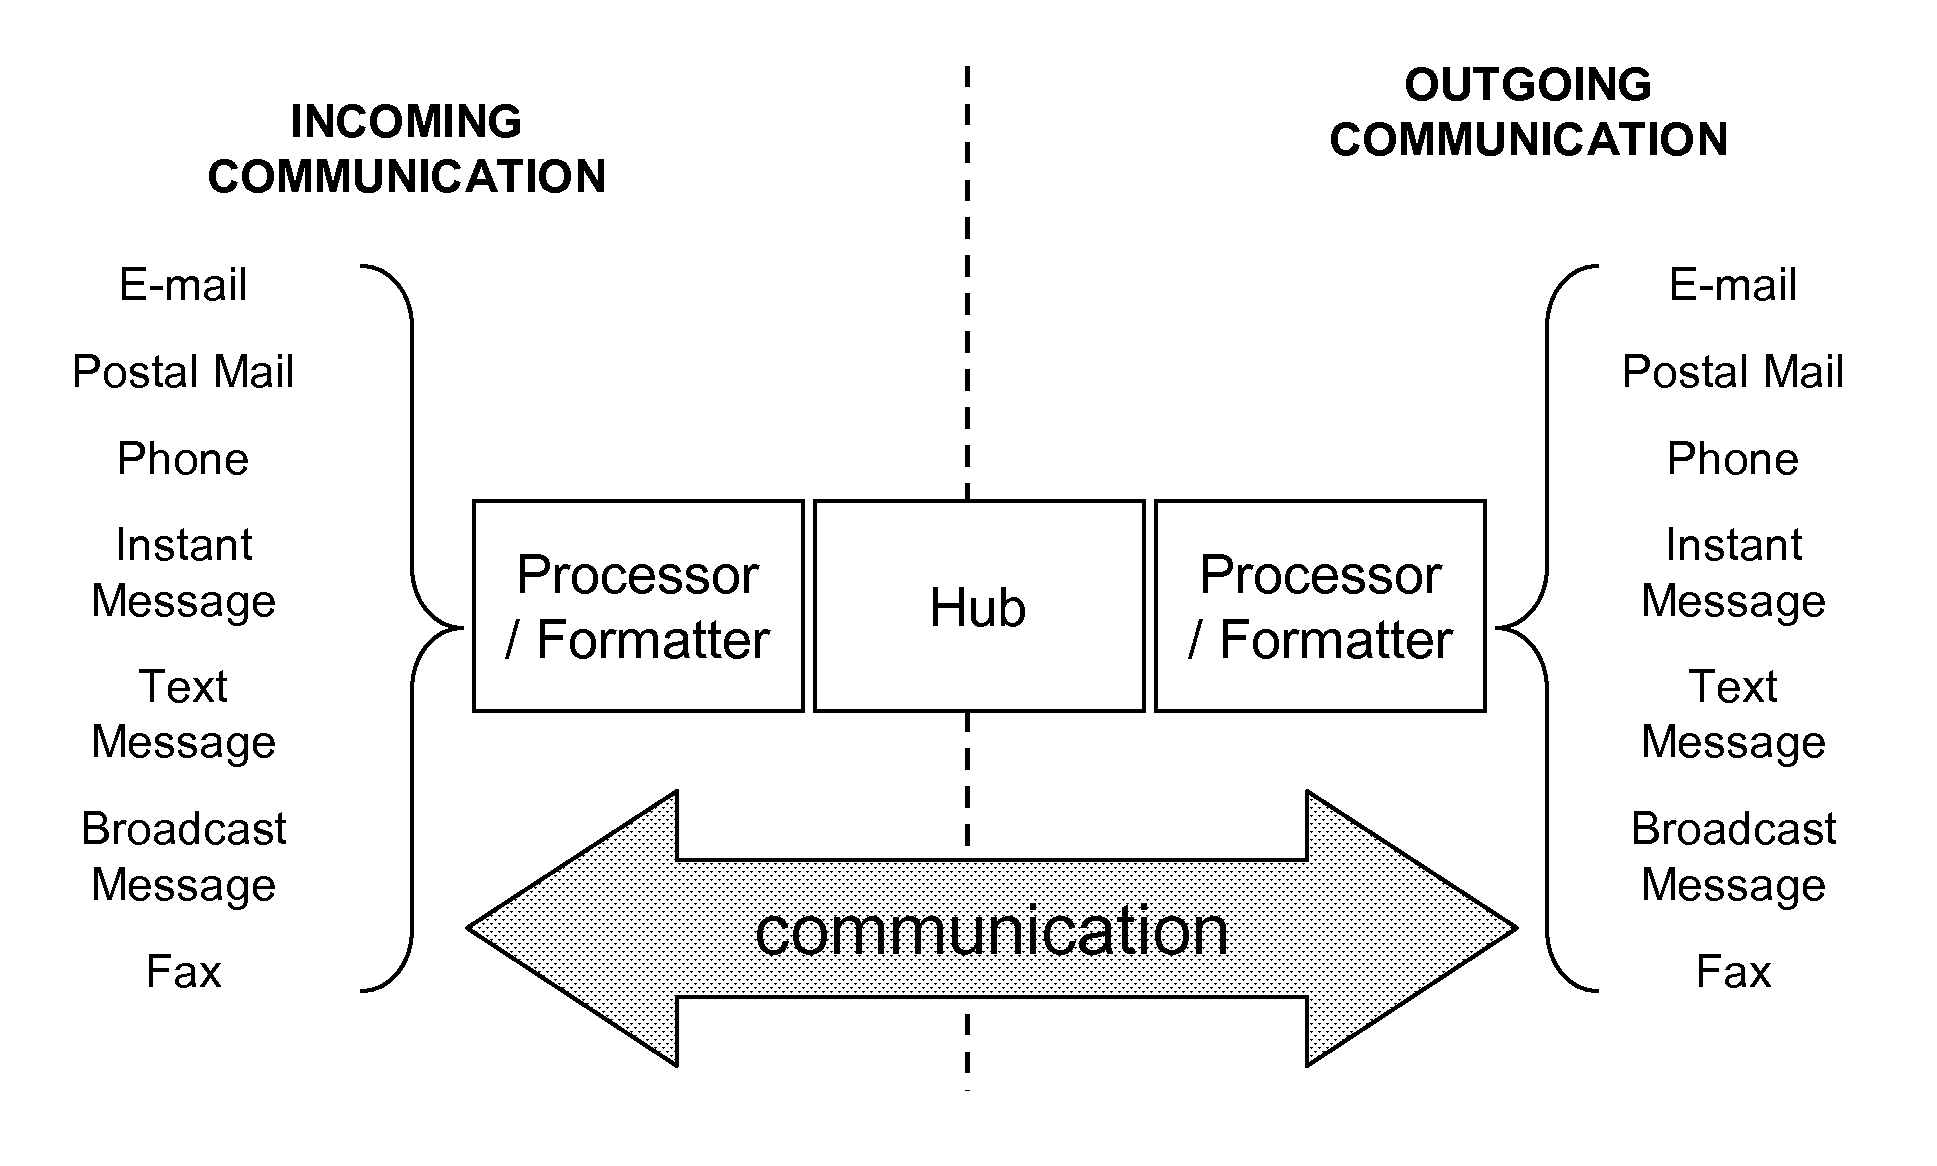 Platform and method for cross-channel communication